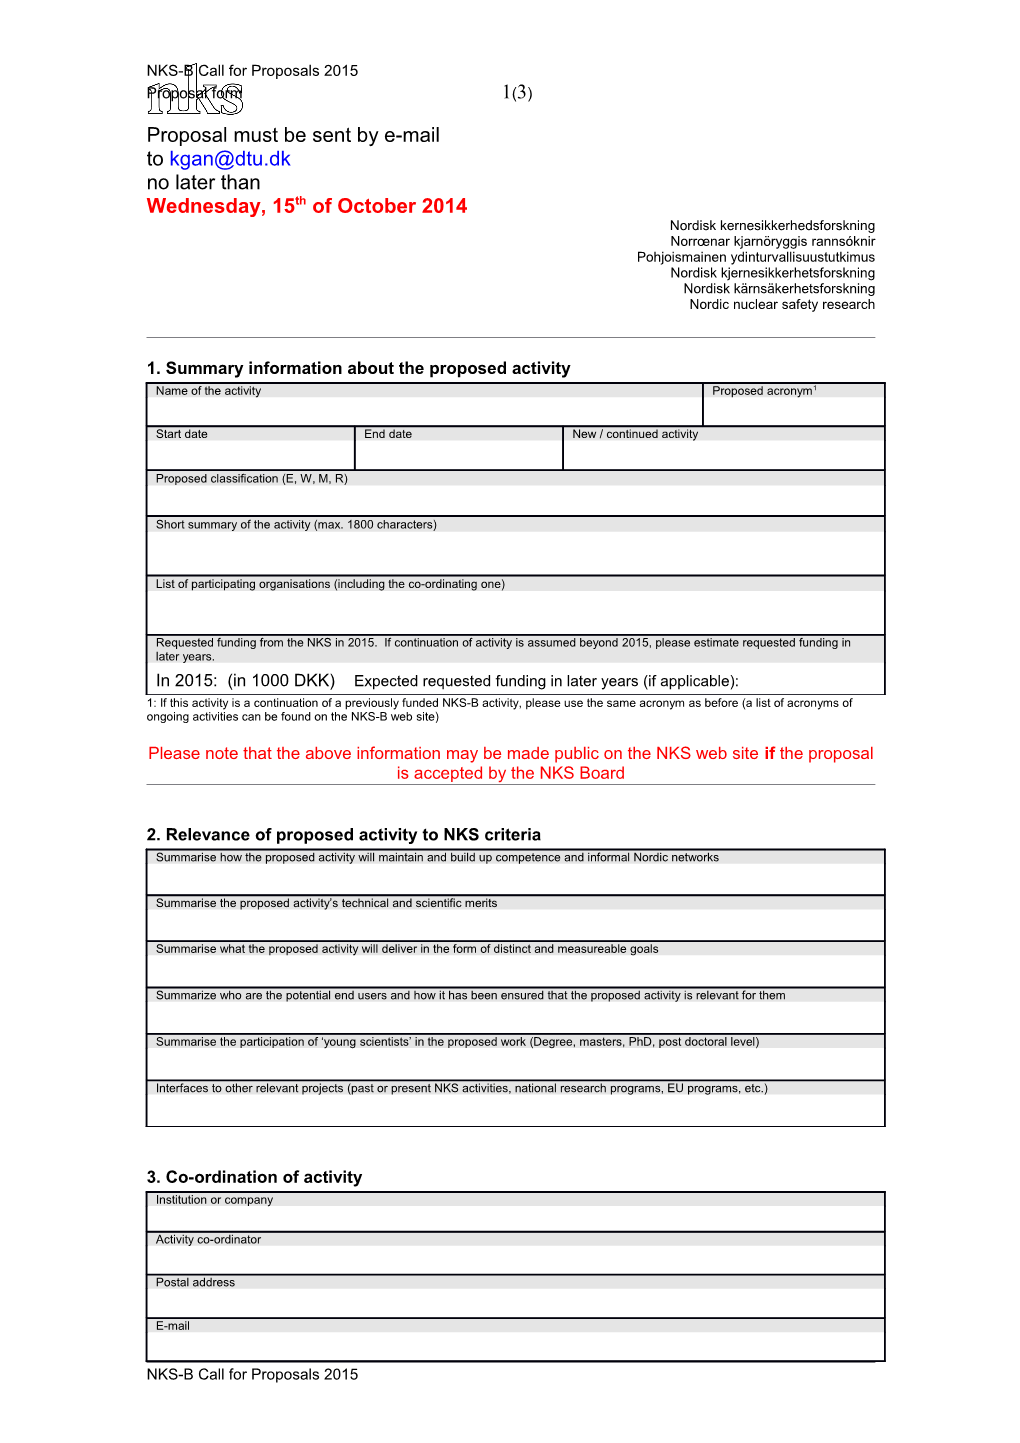 NKS-B Proposal Form